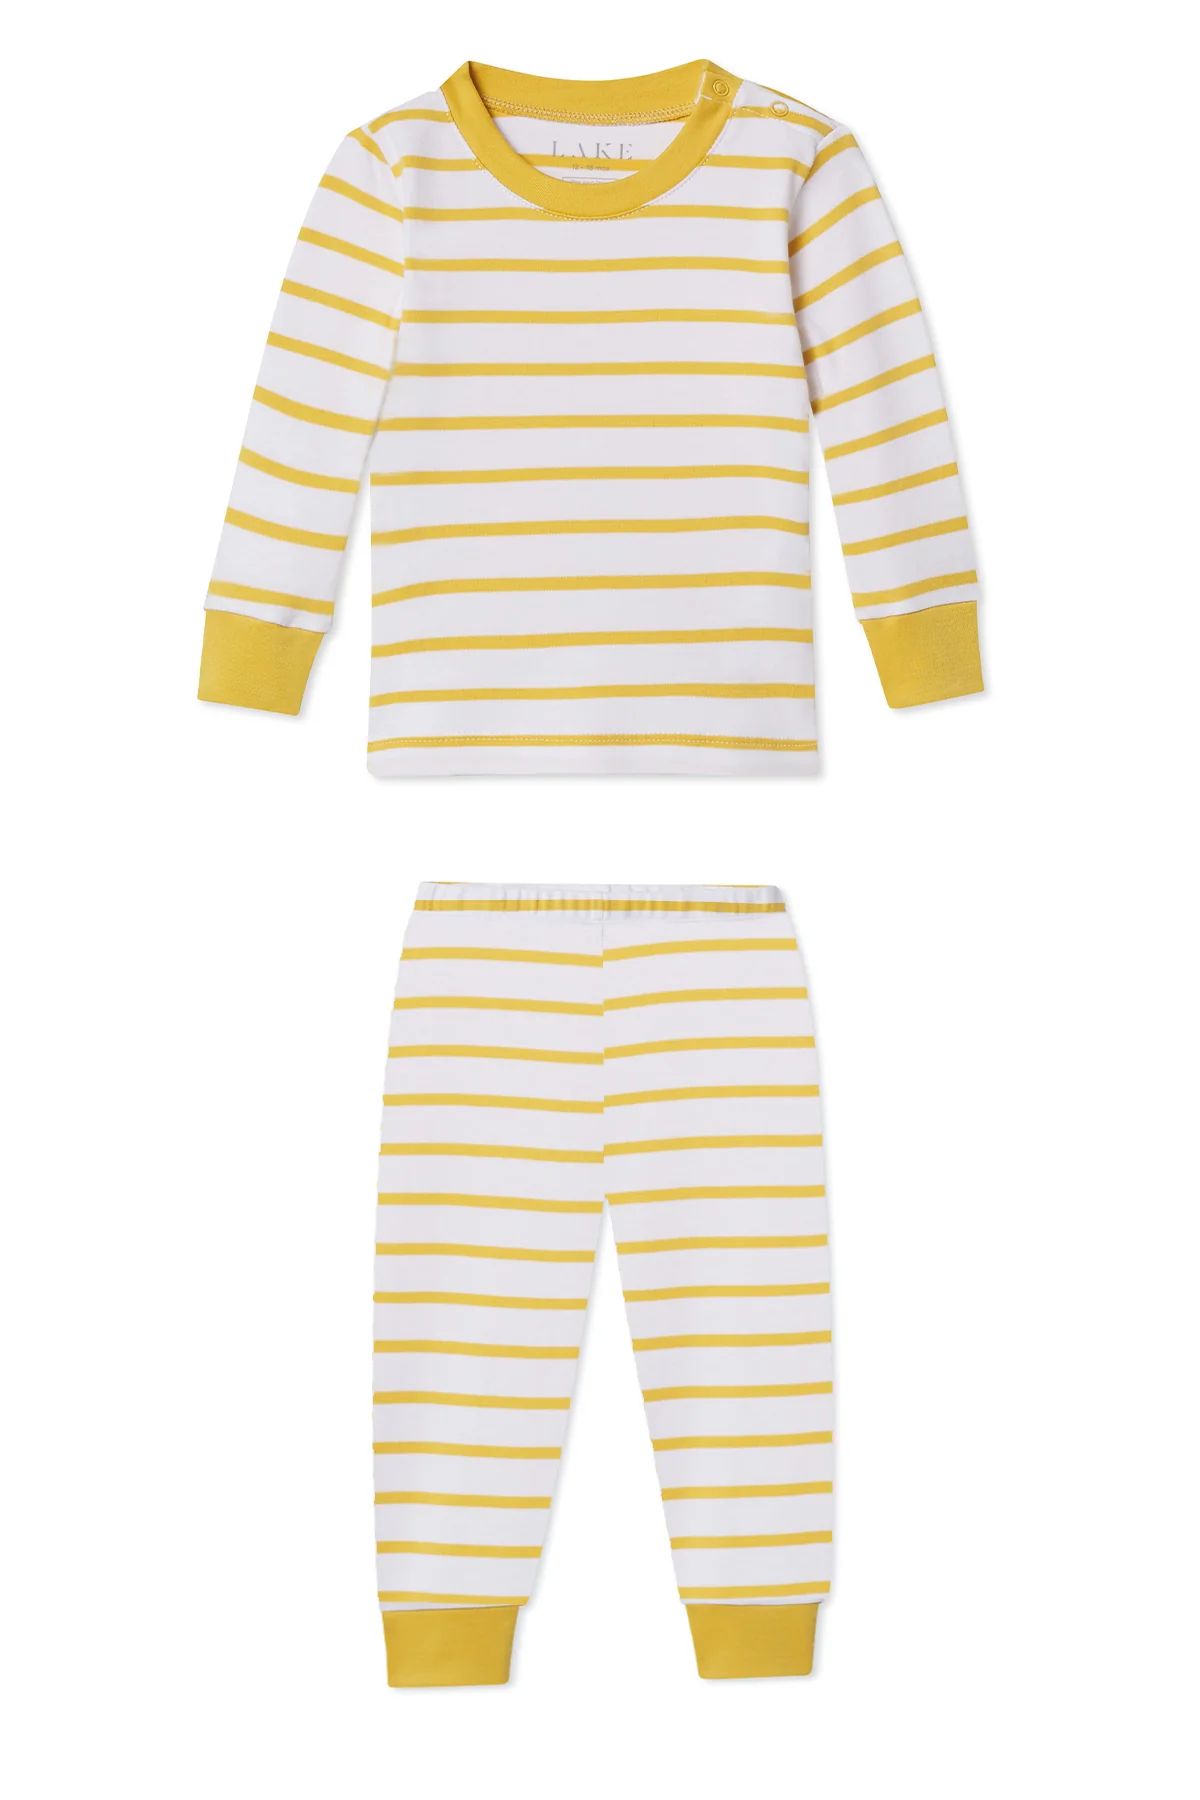 Organic Pima Baby Long-Long Set in Ochre | LAKE Pajamas